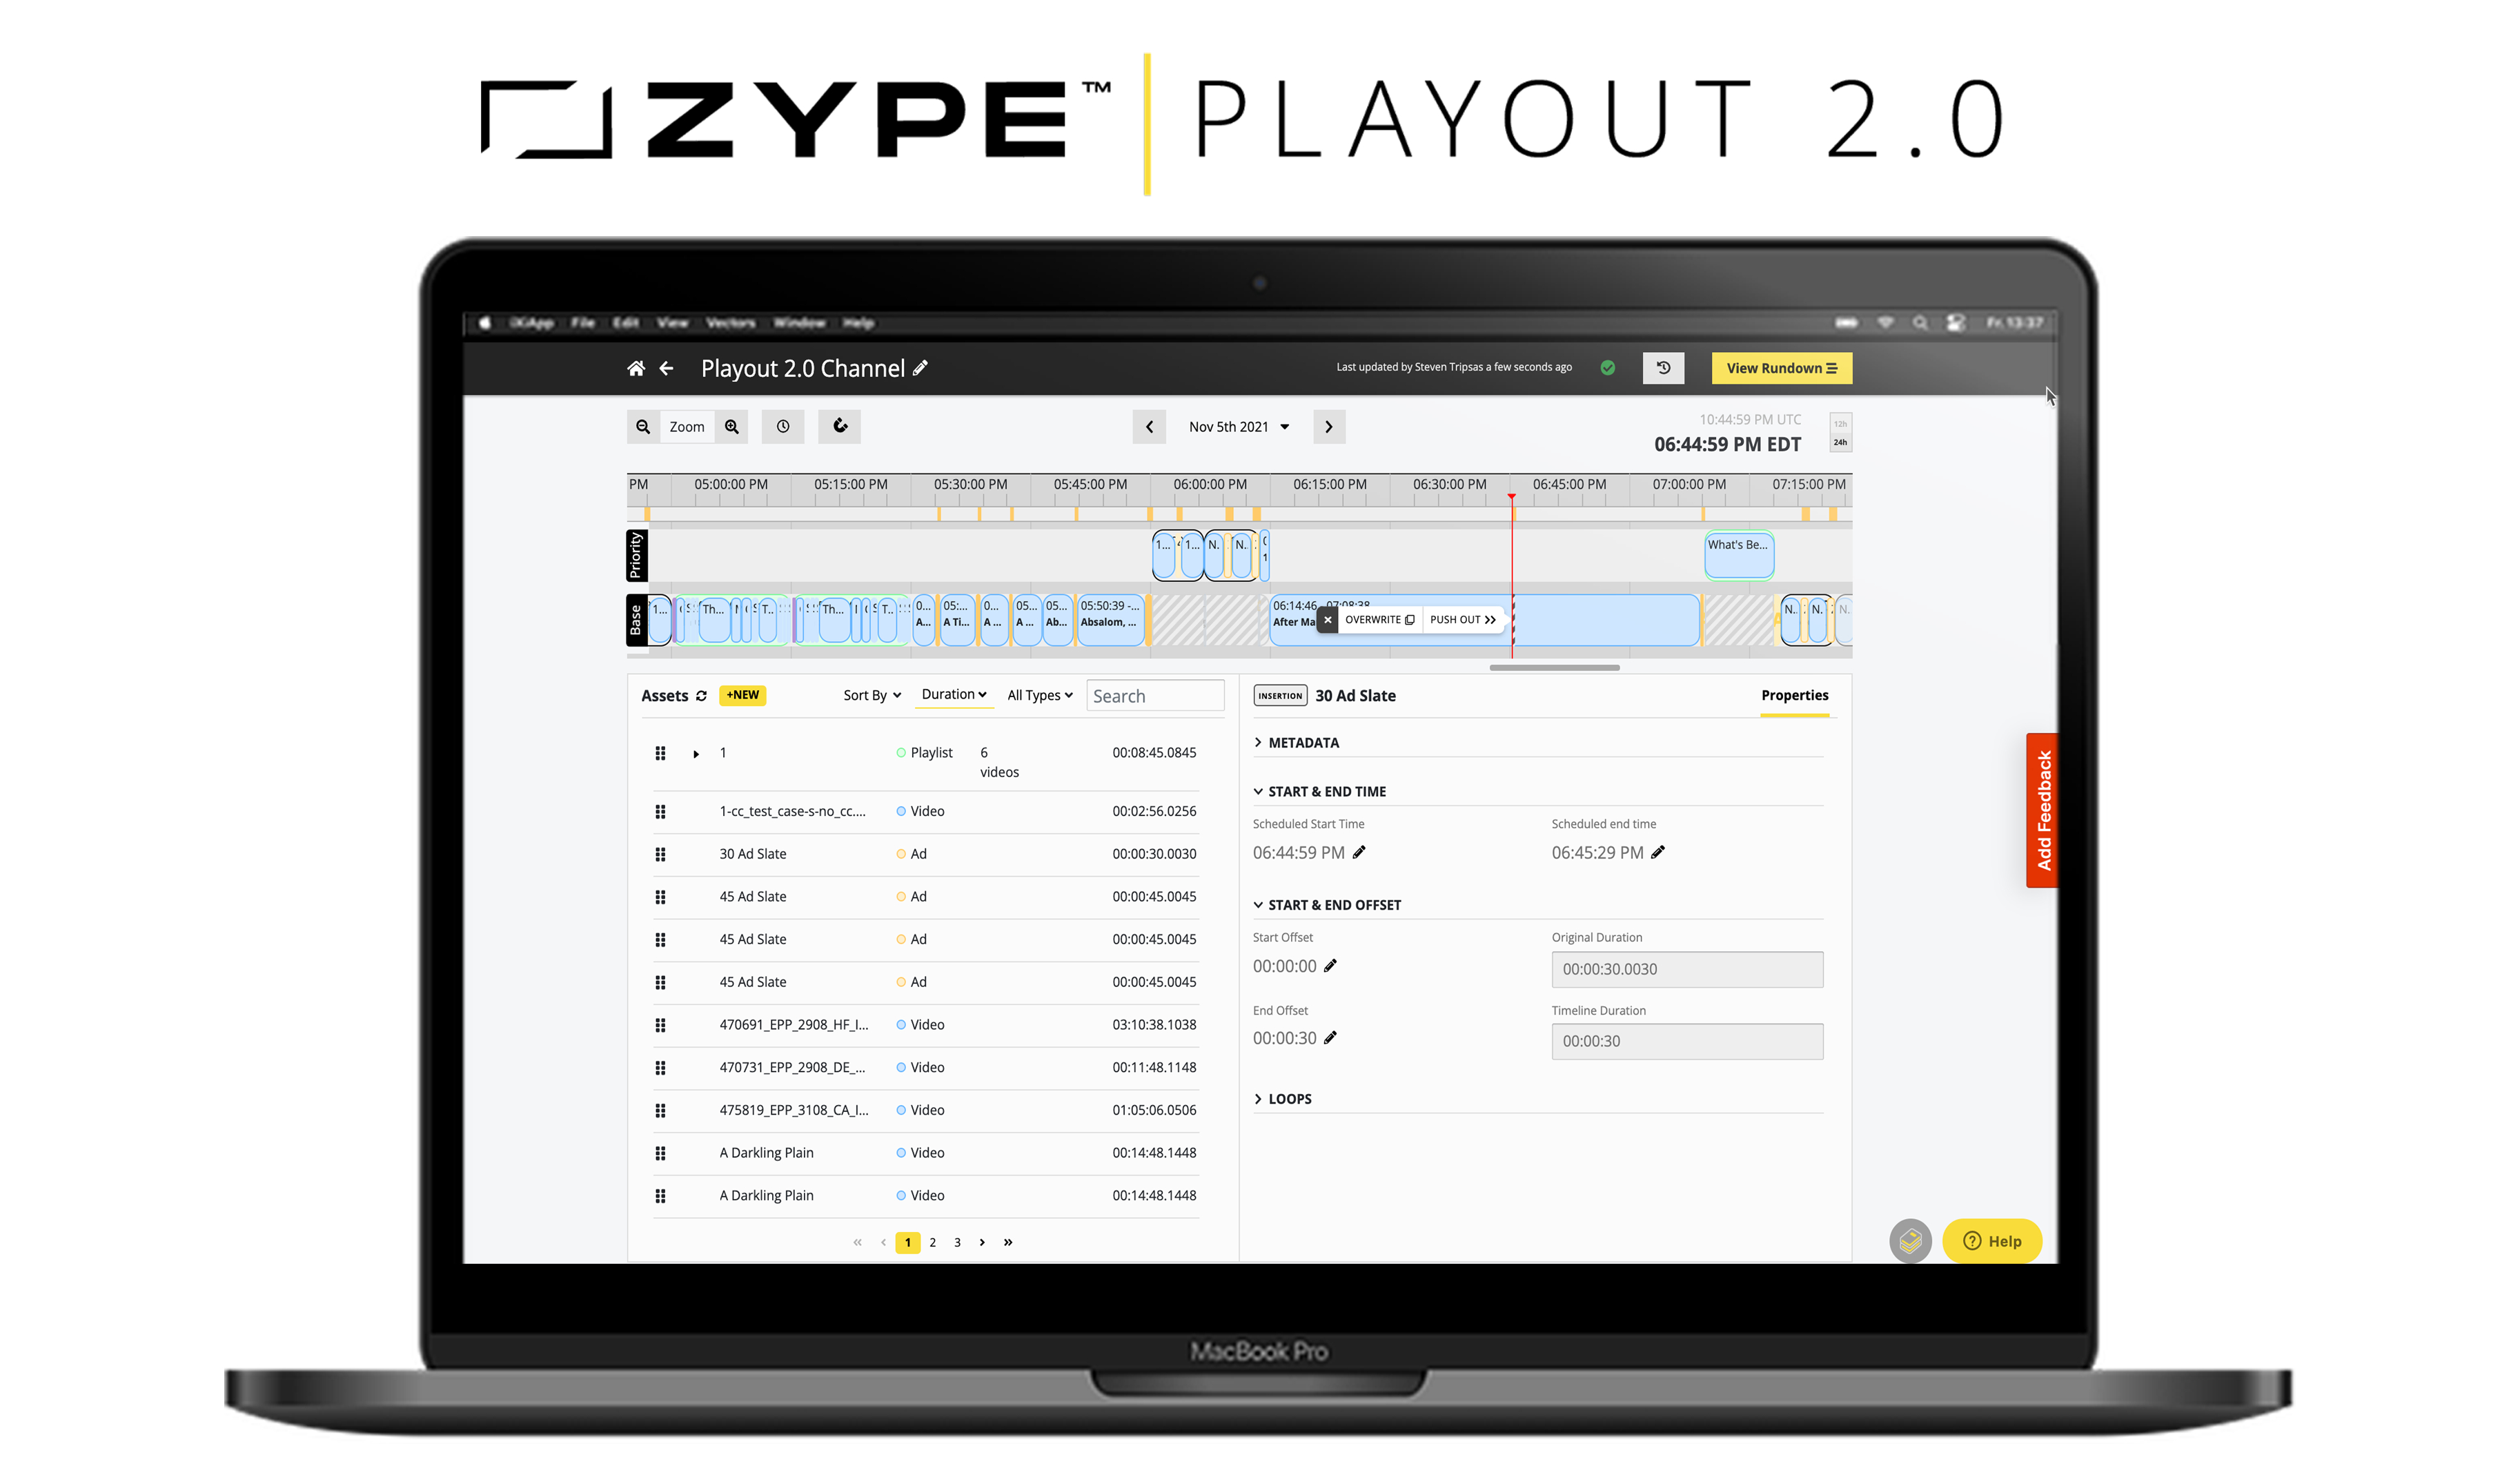 Zype Playout 2.0 dashboard